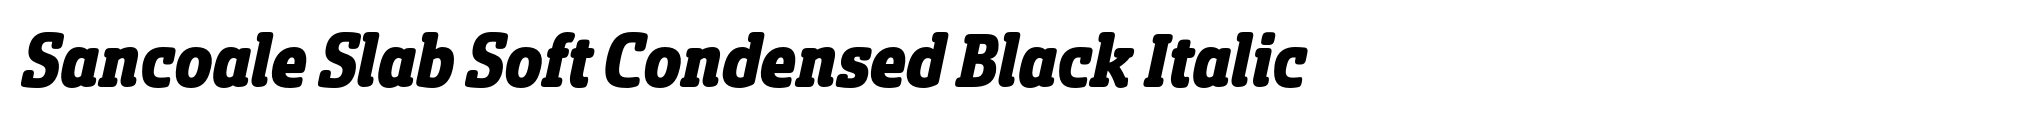 Sancoale Slab Soft Condensed Black Italic image